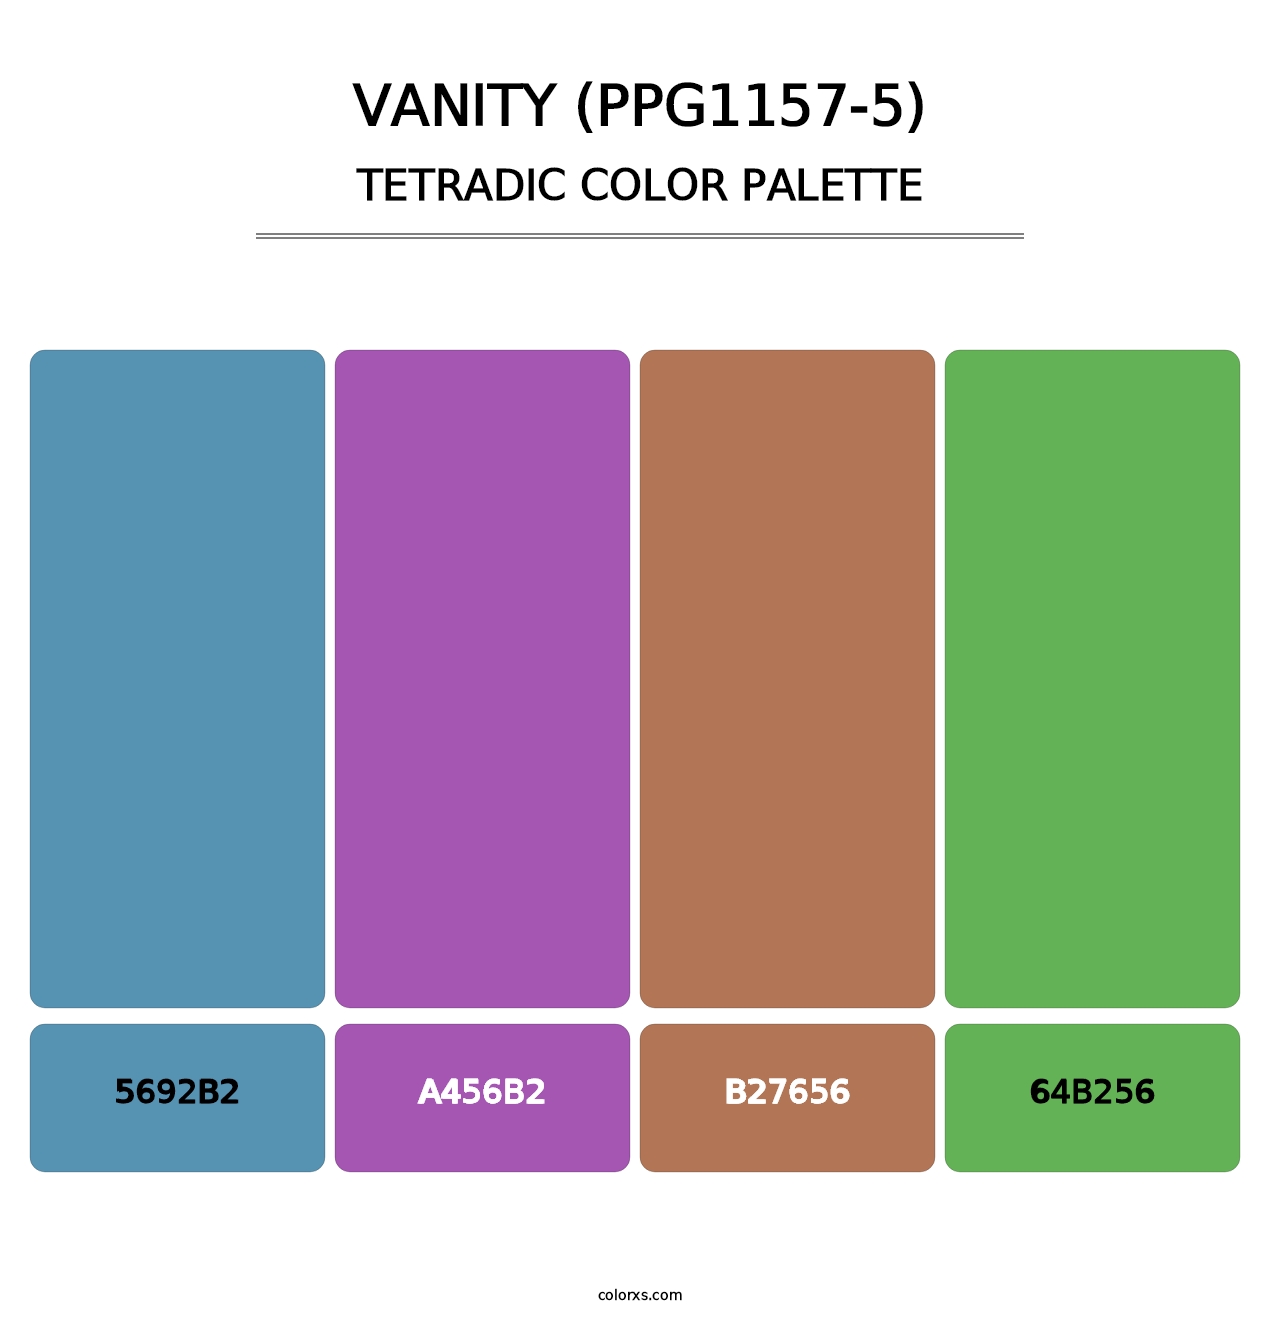 Vanity (PPG1157-5) - Tetradic Color Palette